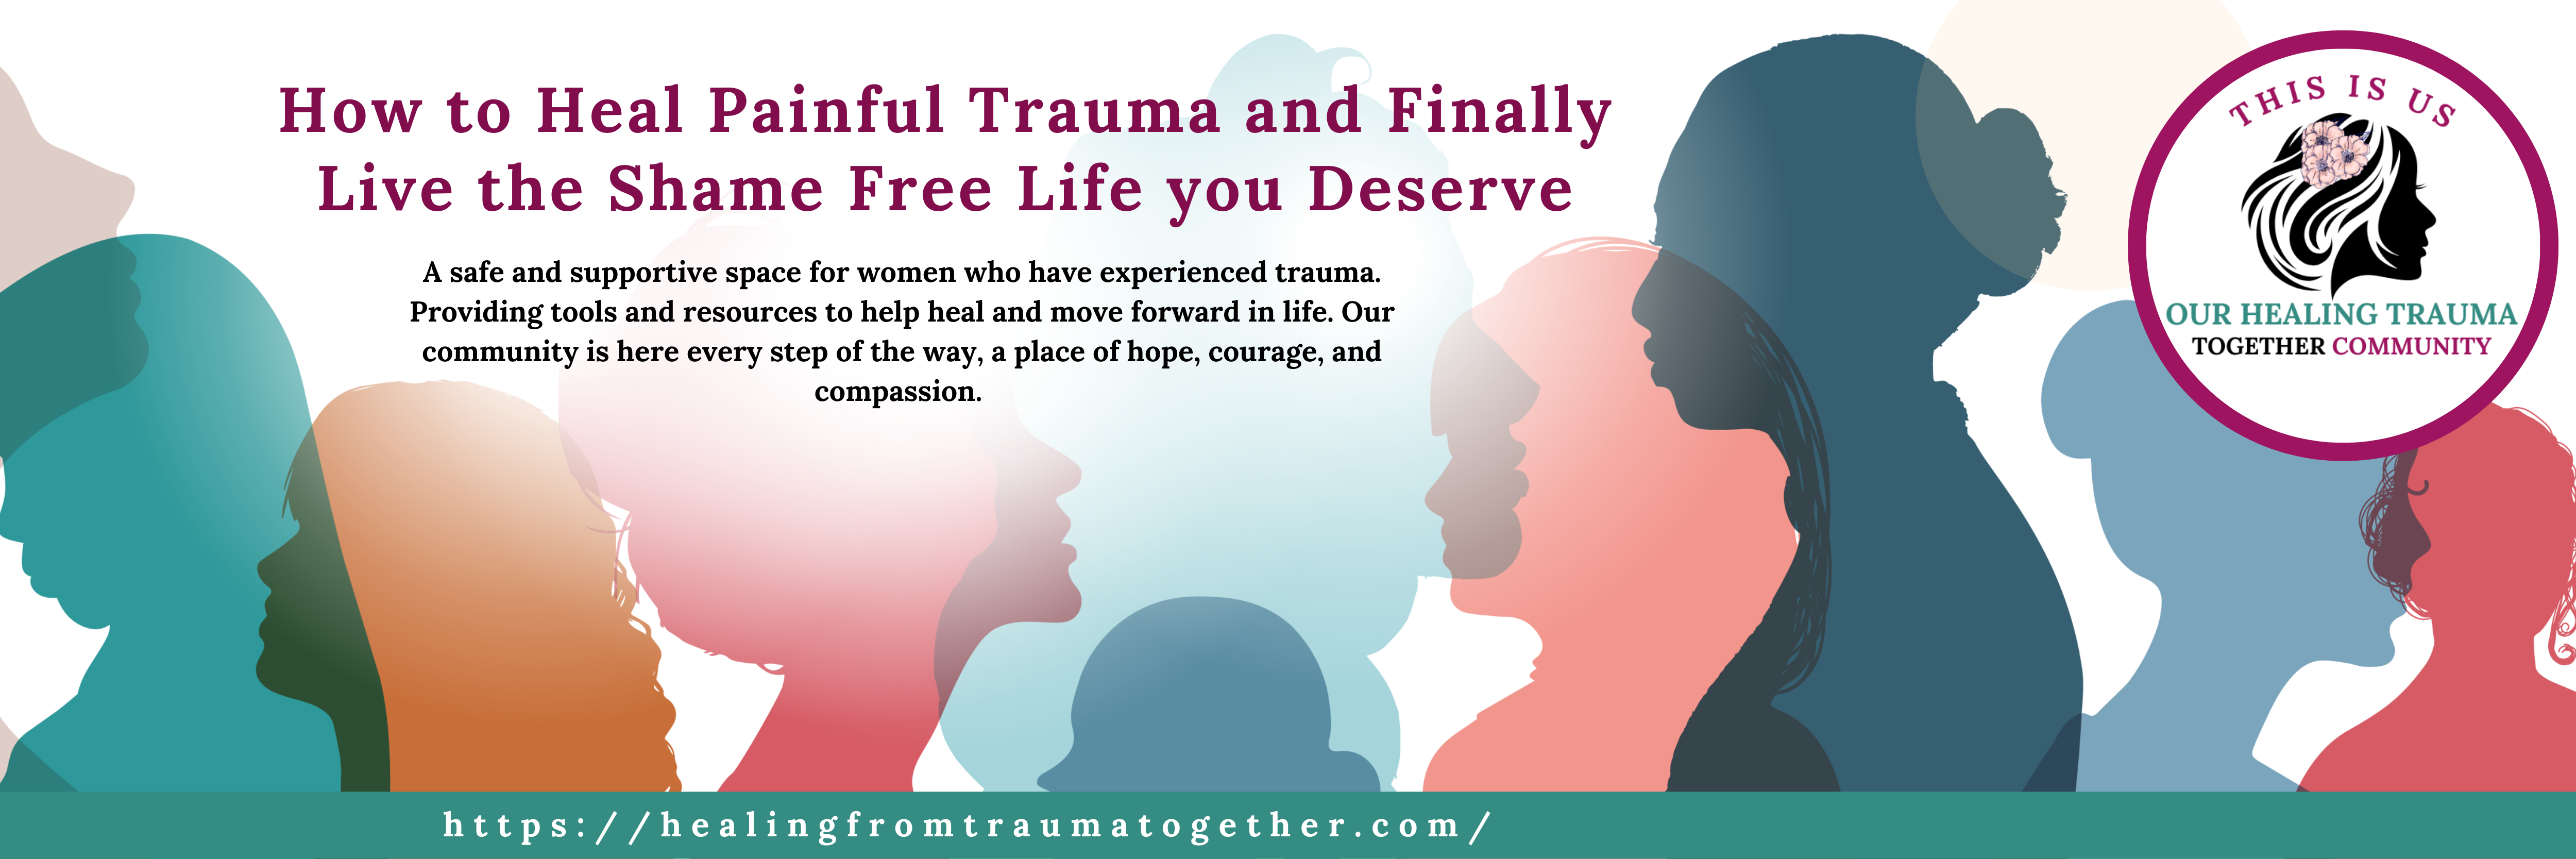 Healing Trauma Together